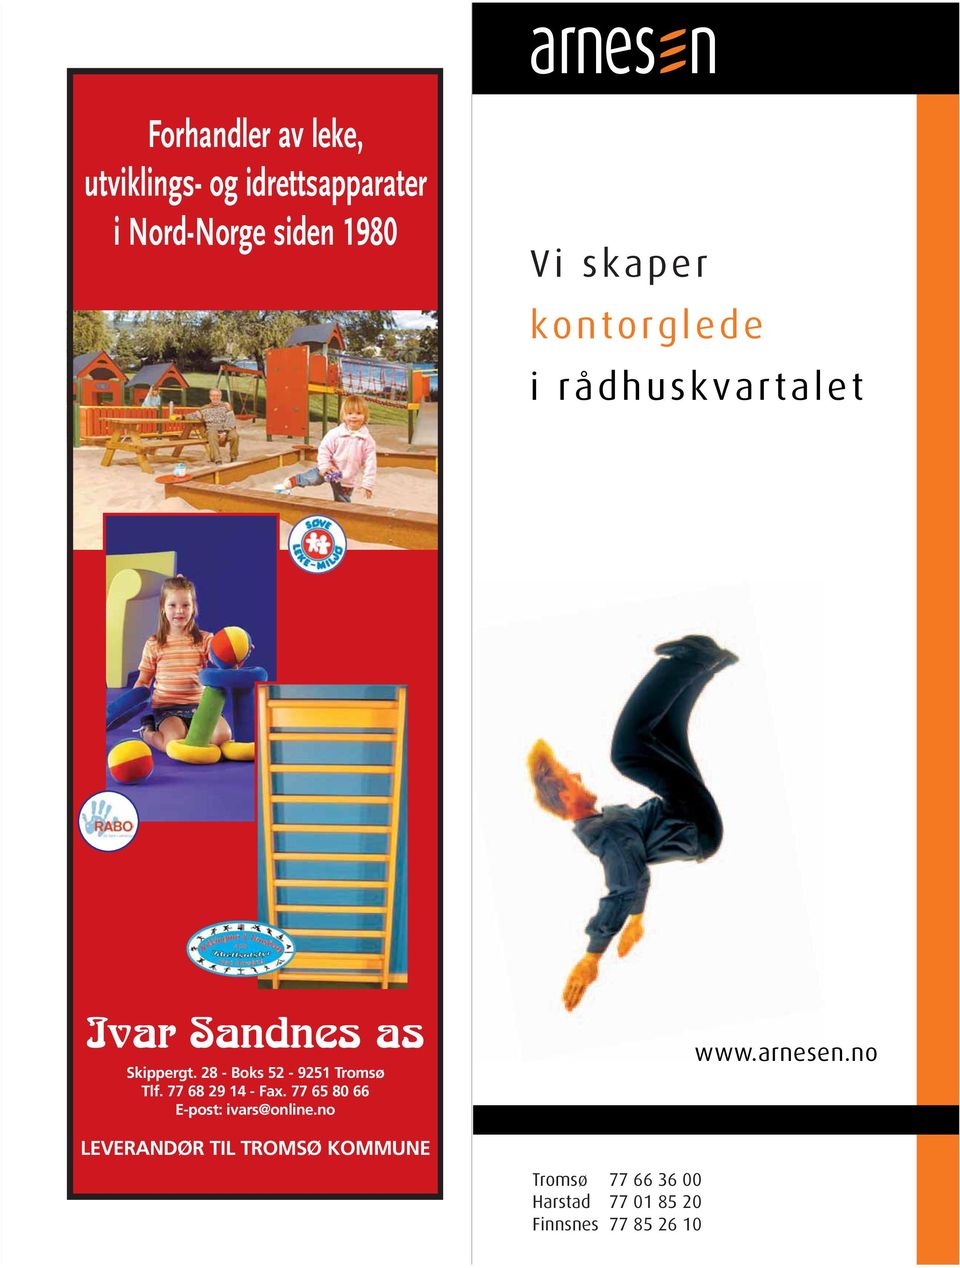 28 - Boks 52-9251 Tromsø Tlf. 77 68 29 14 - Fax. 77 65 80 66 E-post: ivars@online.